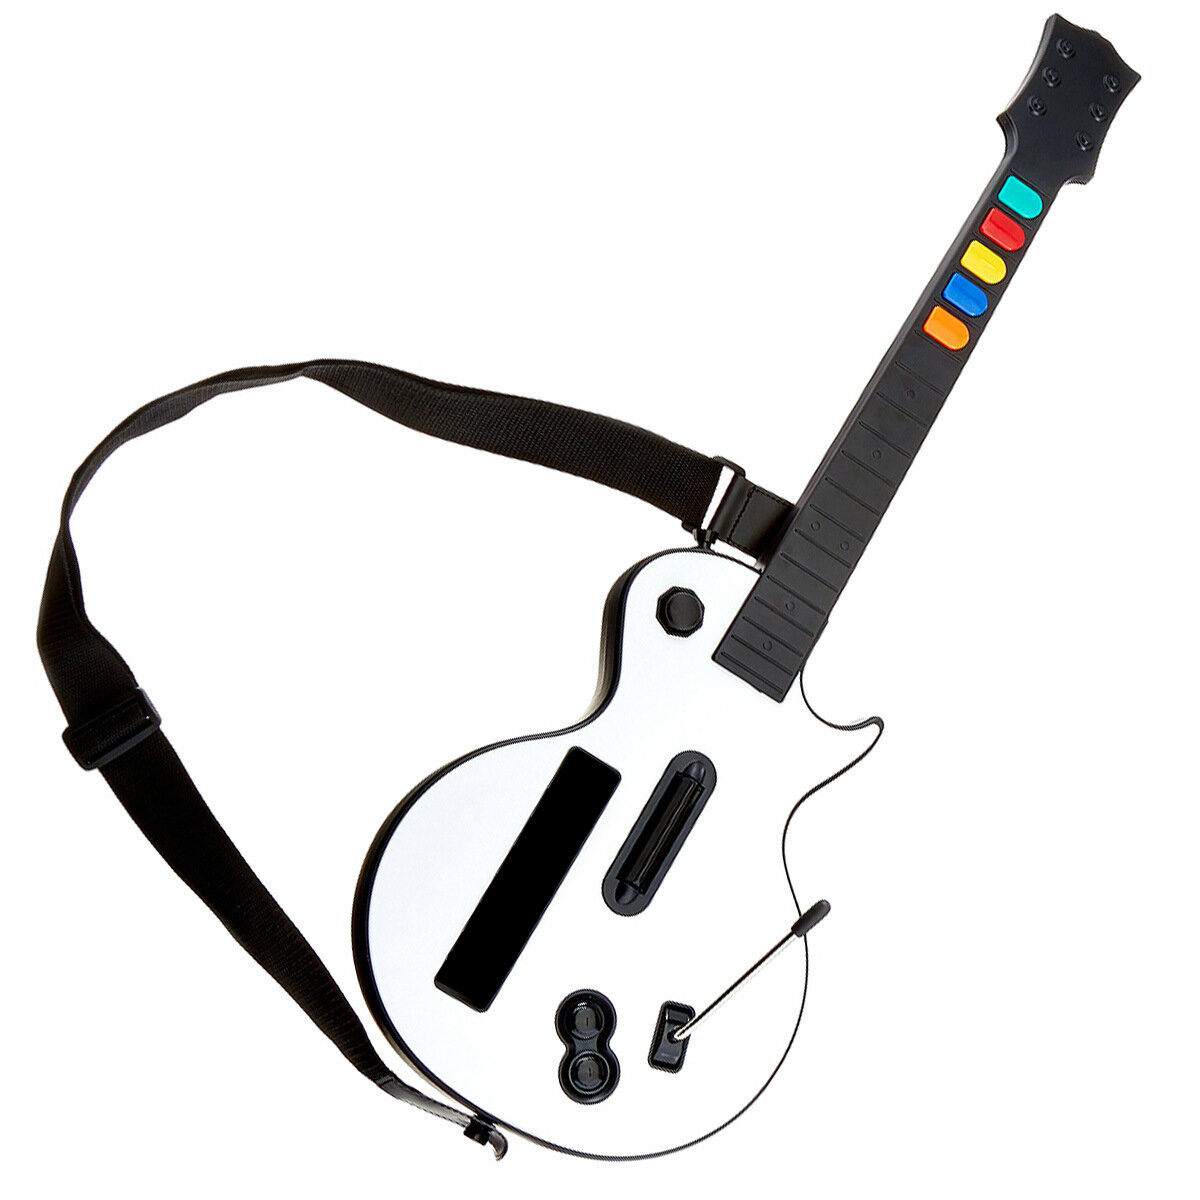 

DOYO Guitar Gamepad Guitar Wii Accessories for Guitar Hero Game for Nintendo Mario Video Games